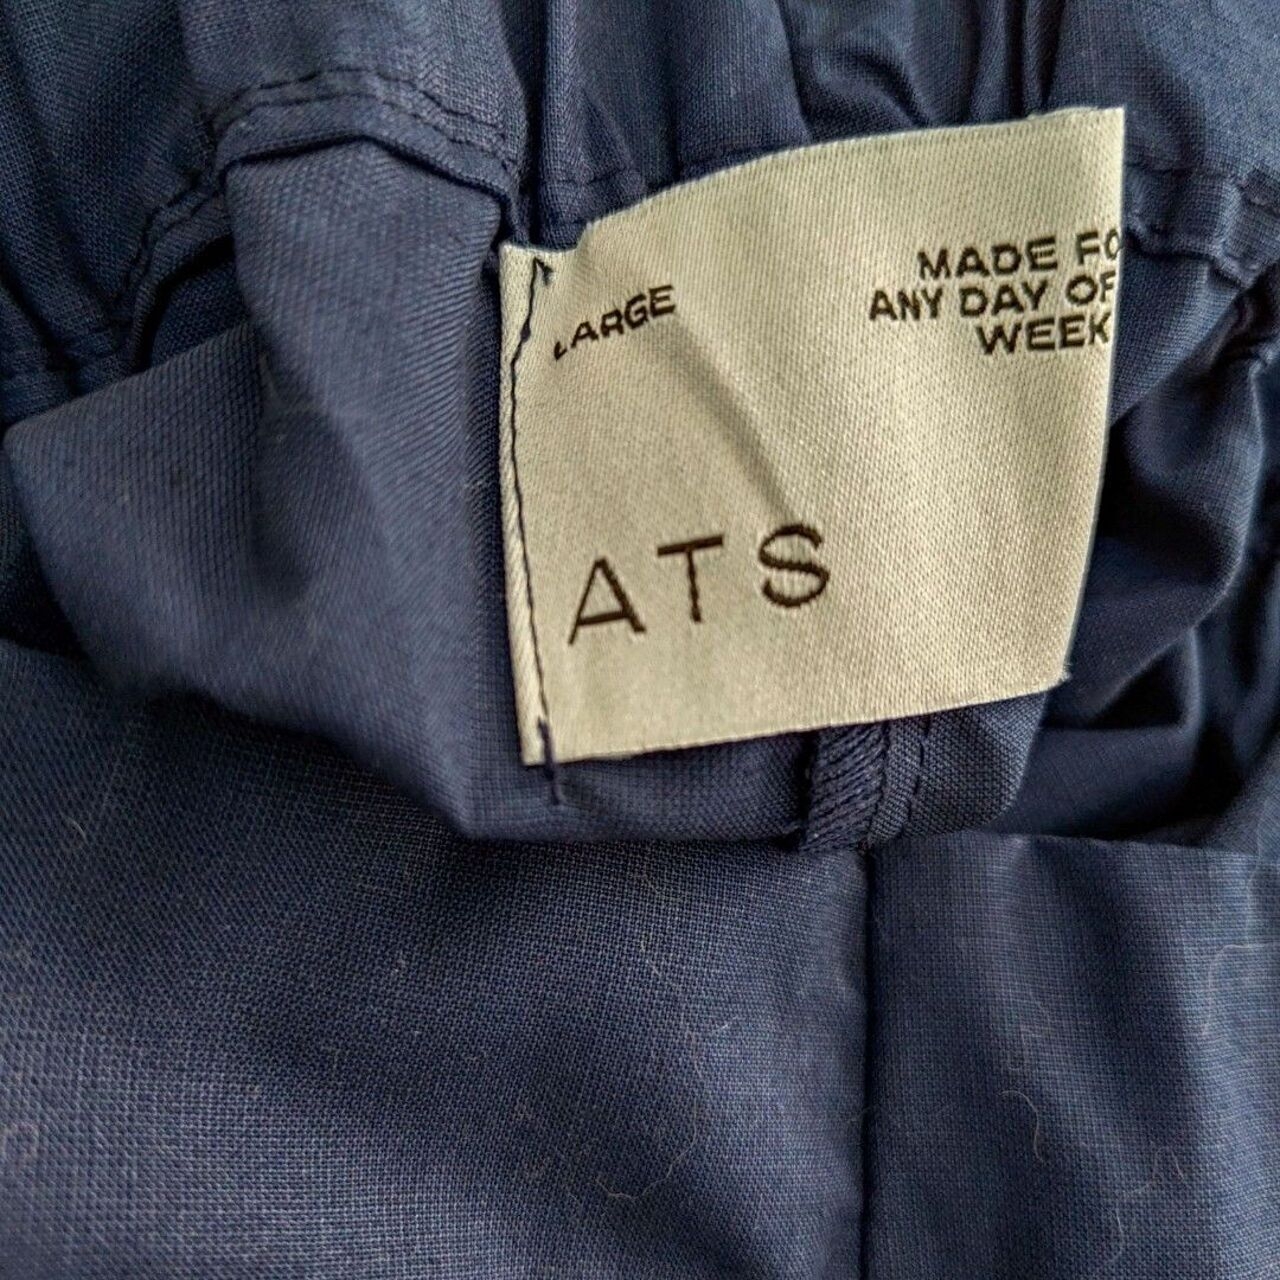 Ats The Label Navy Long Pants